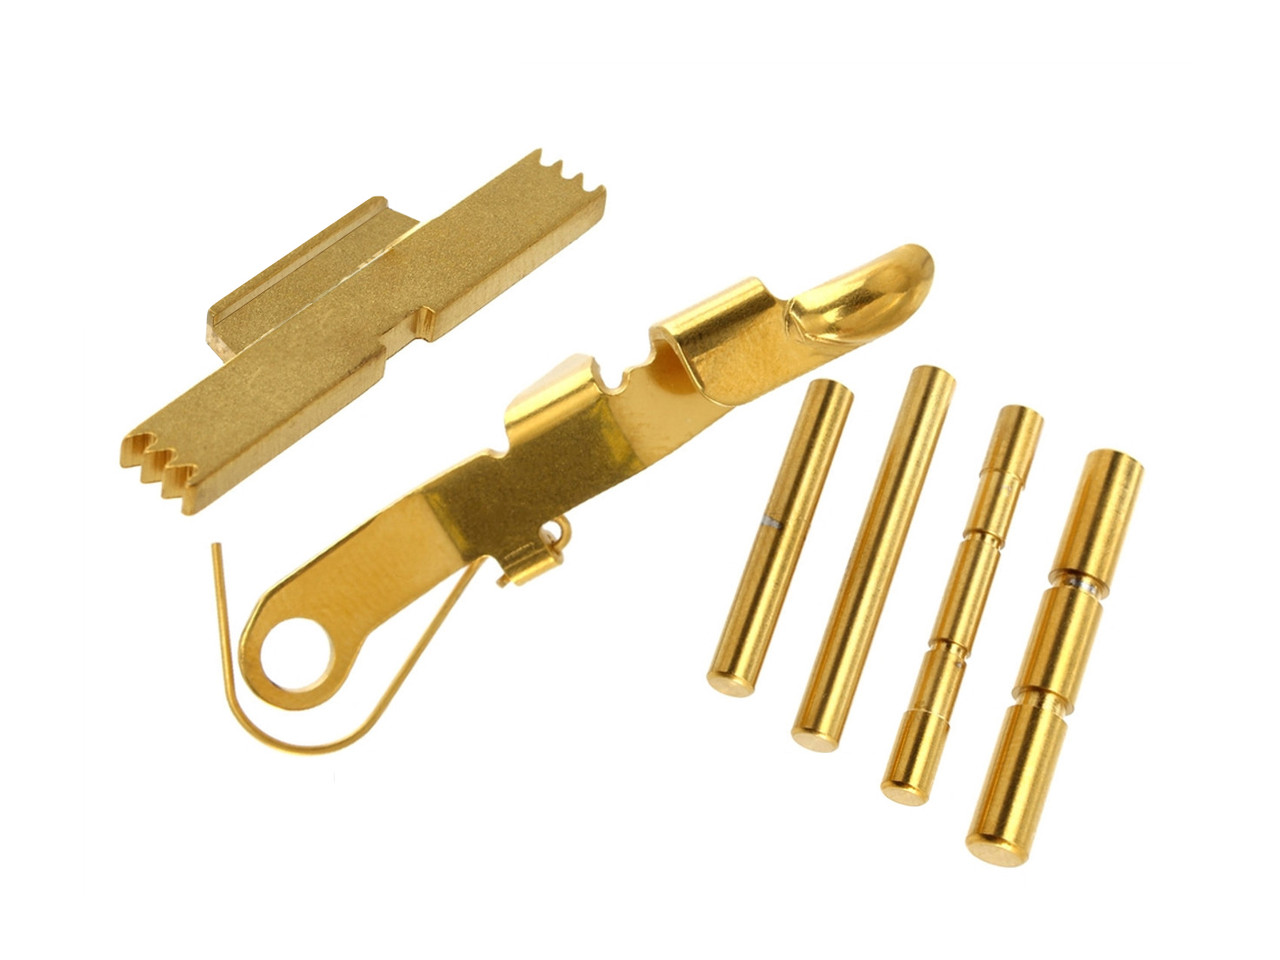 Lower Frame Parts Kit for glock 17 Generation 1 - 3 Custom Coated